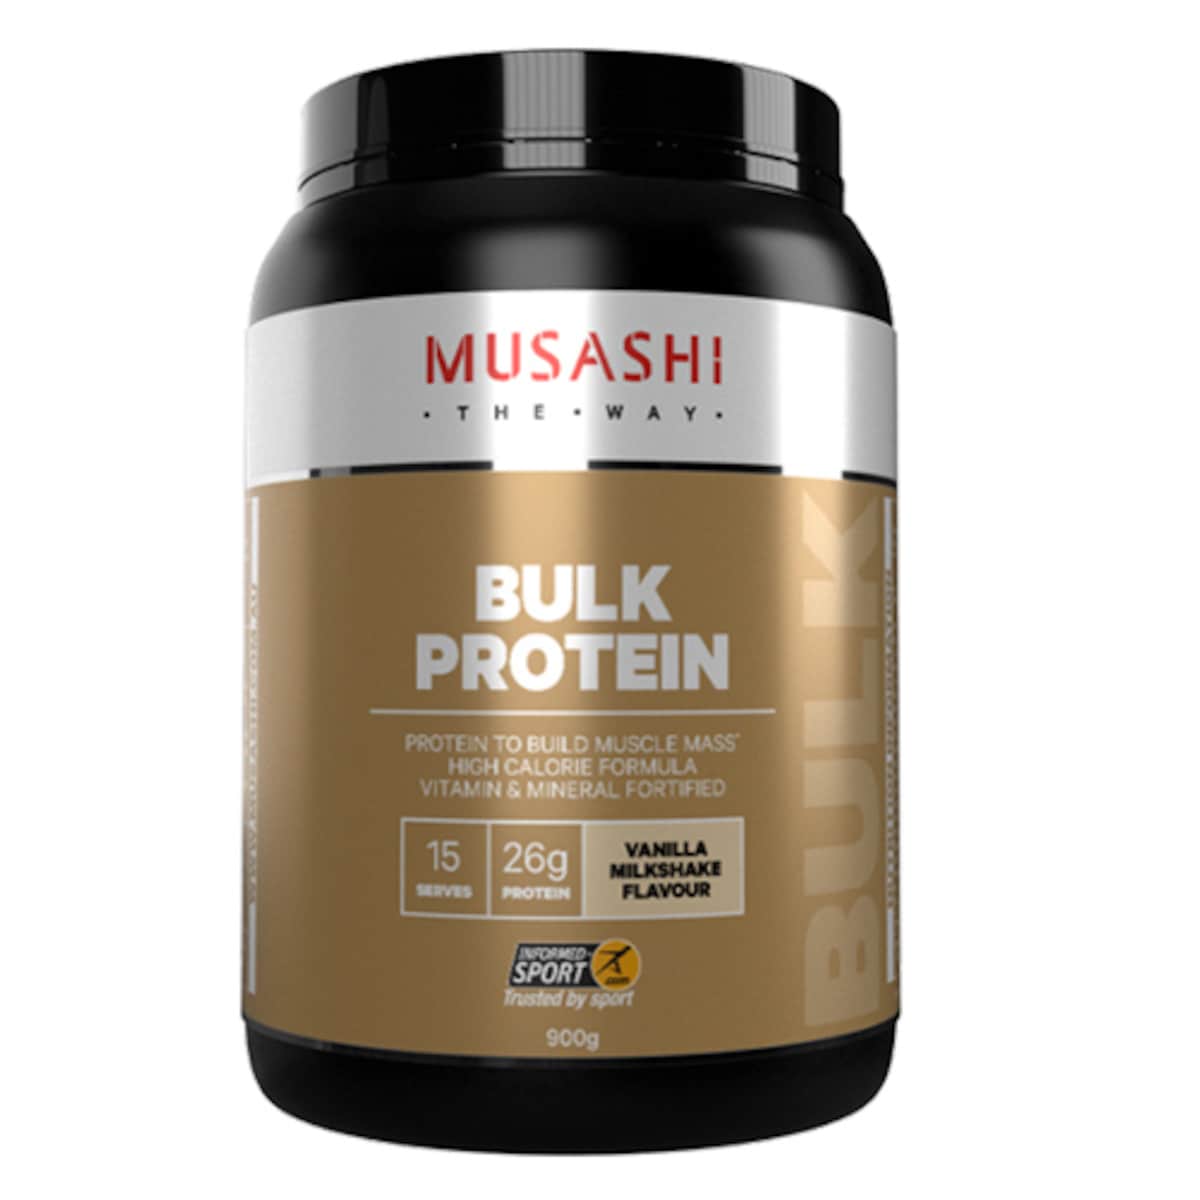 Musashi Bulk Protein Powder Vanilla Milkshake 900g Australia